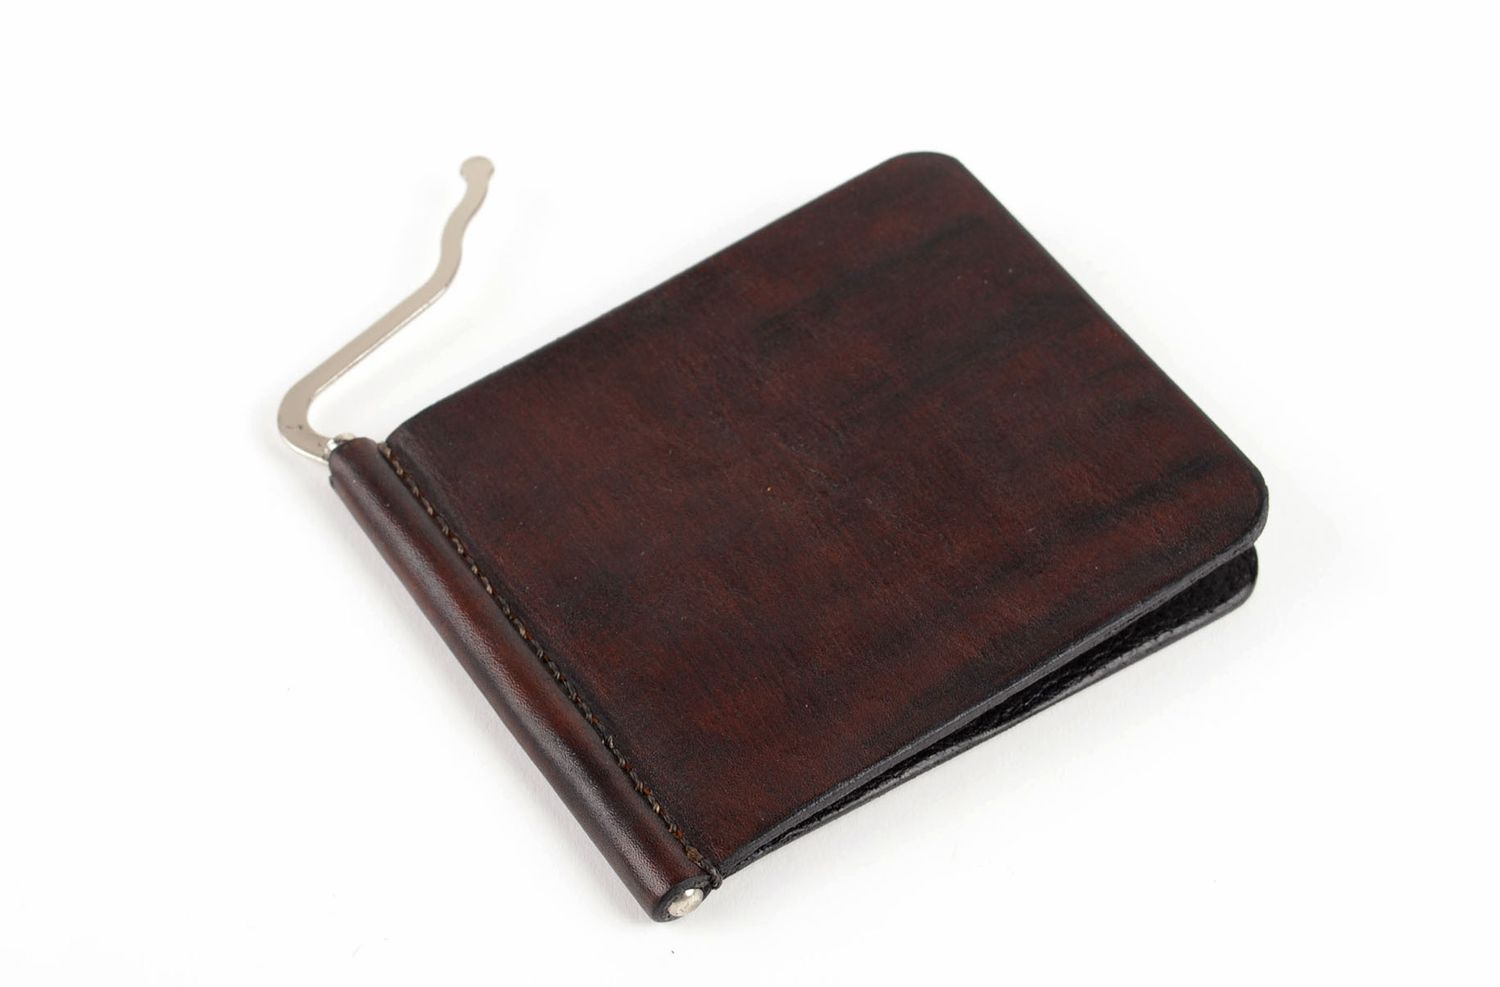 Unusual handmade leather wallet elegant wallet for men gentlemen only gift ideas photo 1